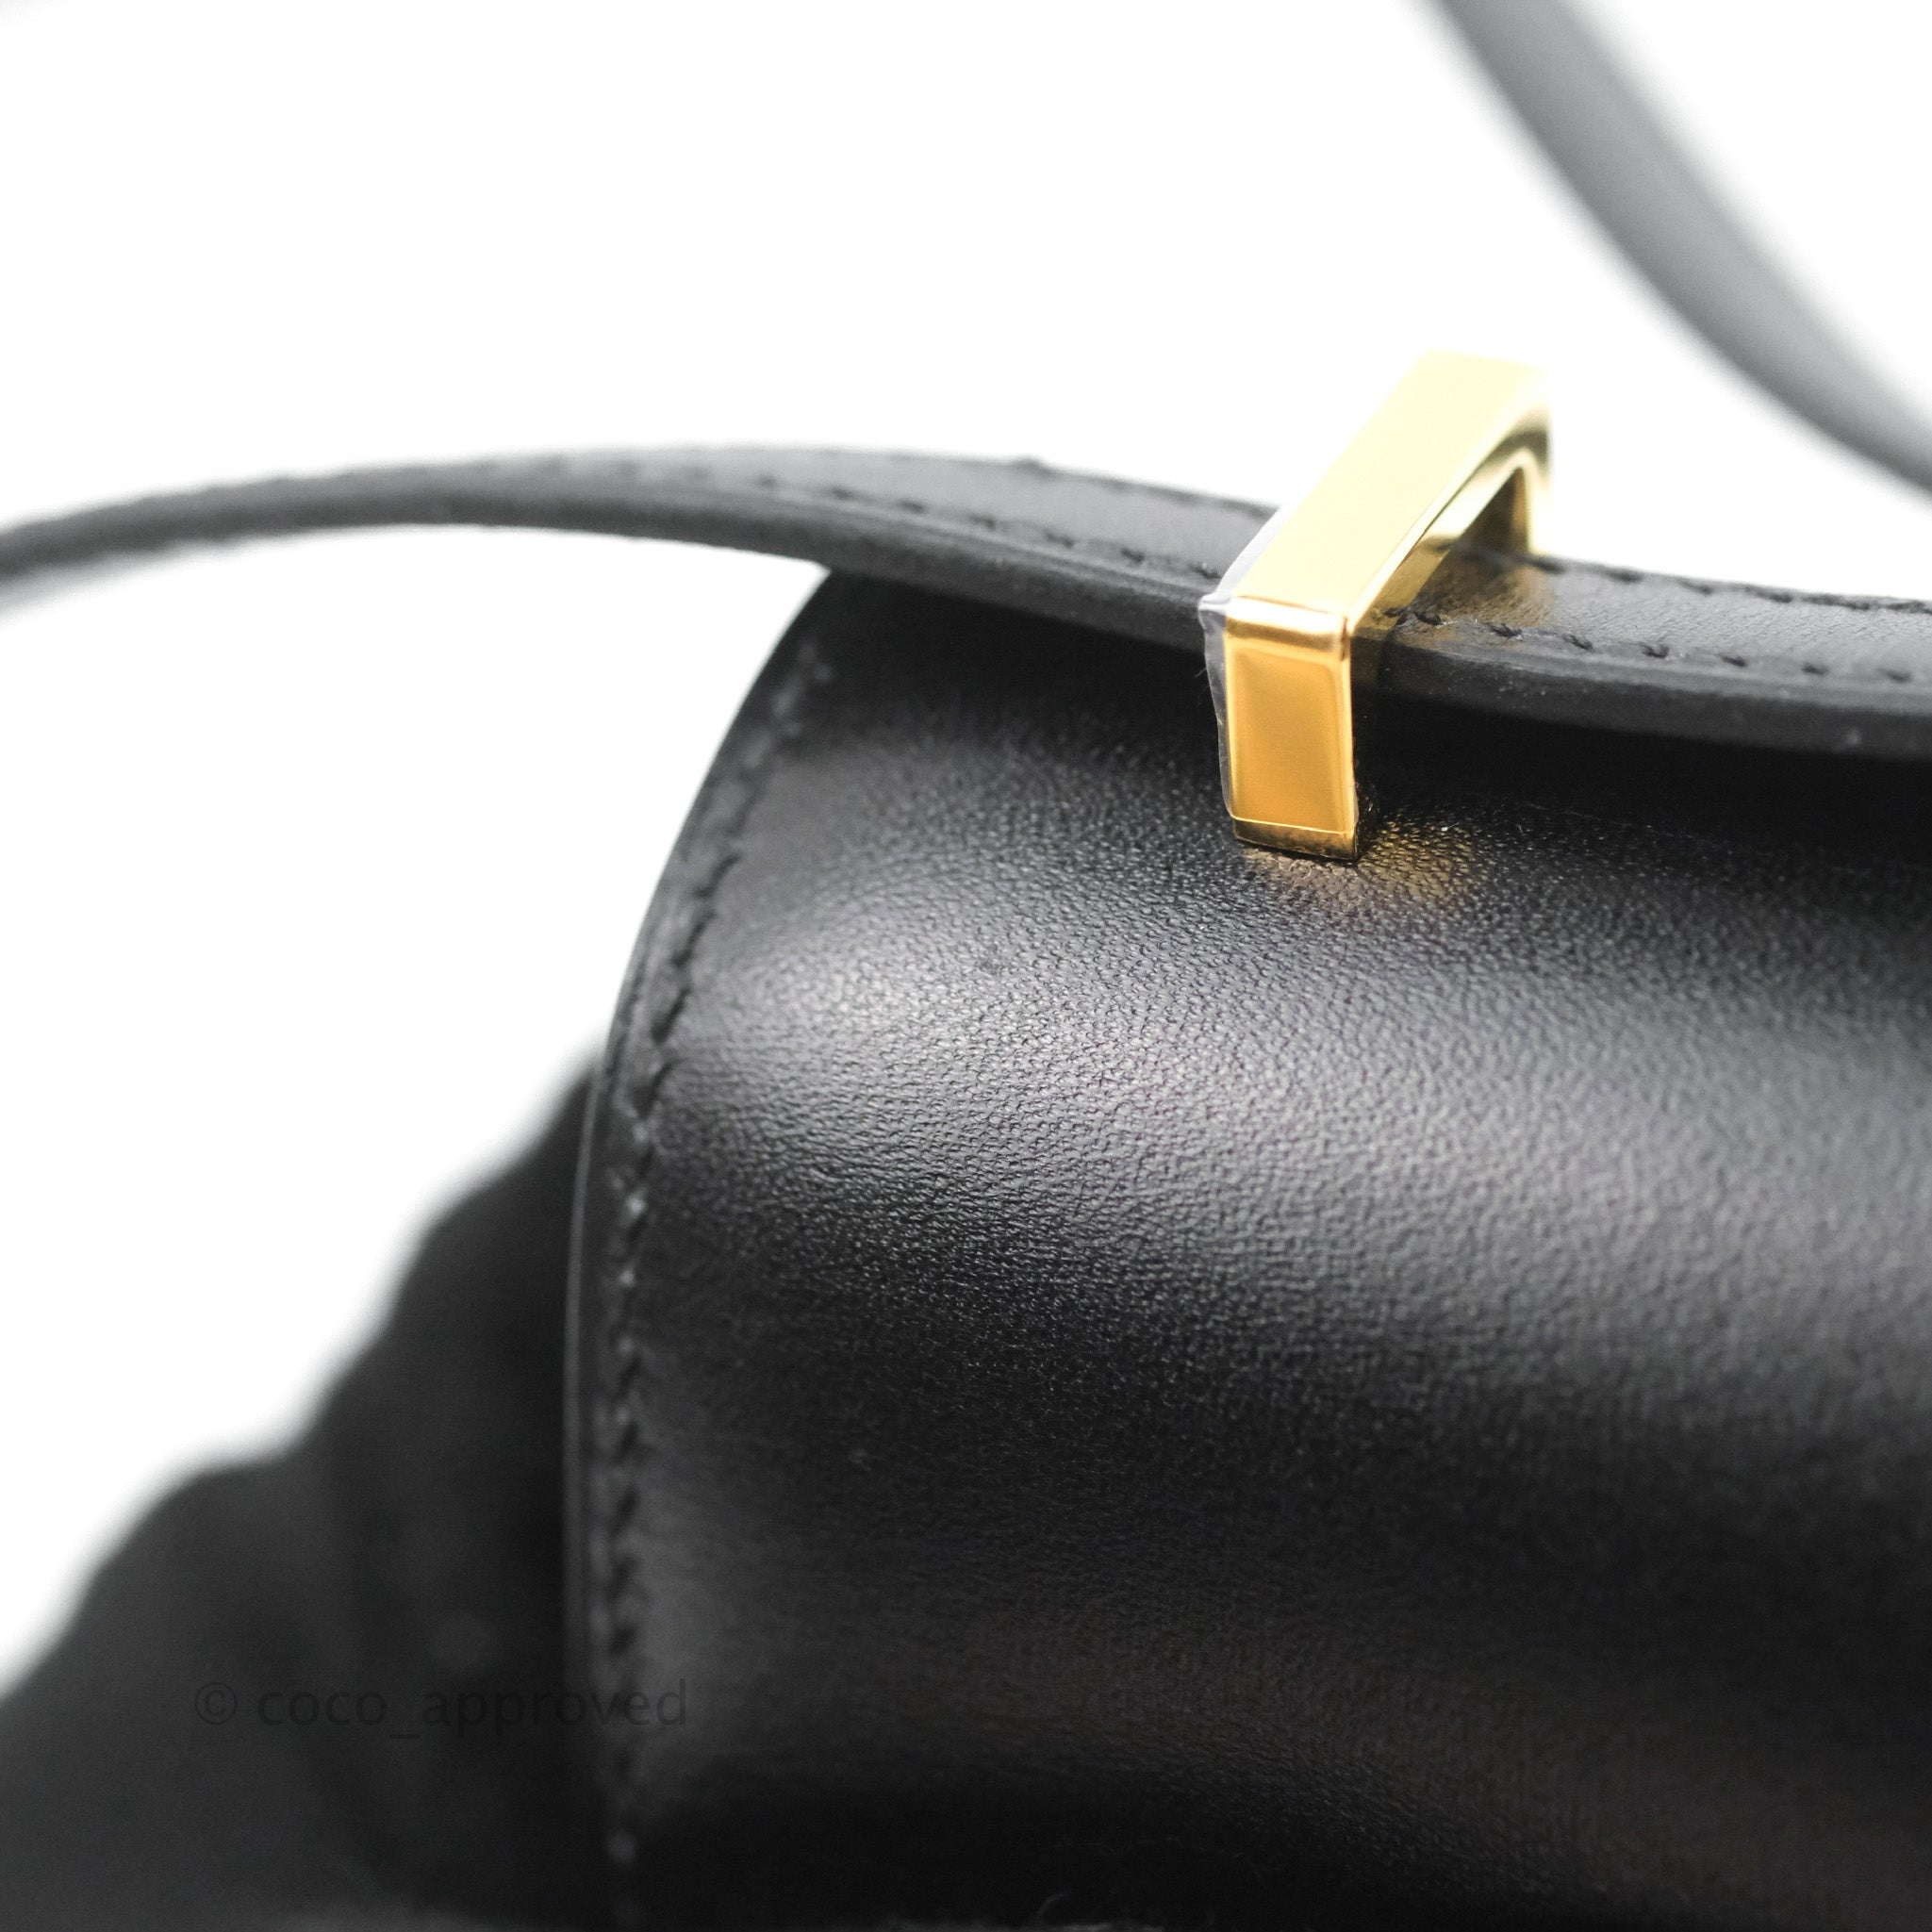 Lot 4 - An Hermès black box leather mini Constance bag